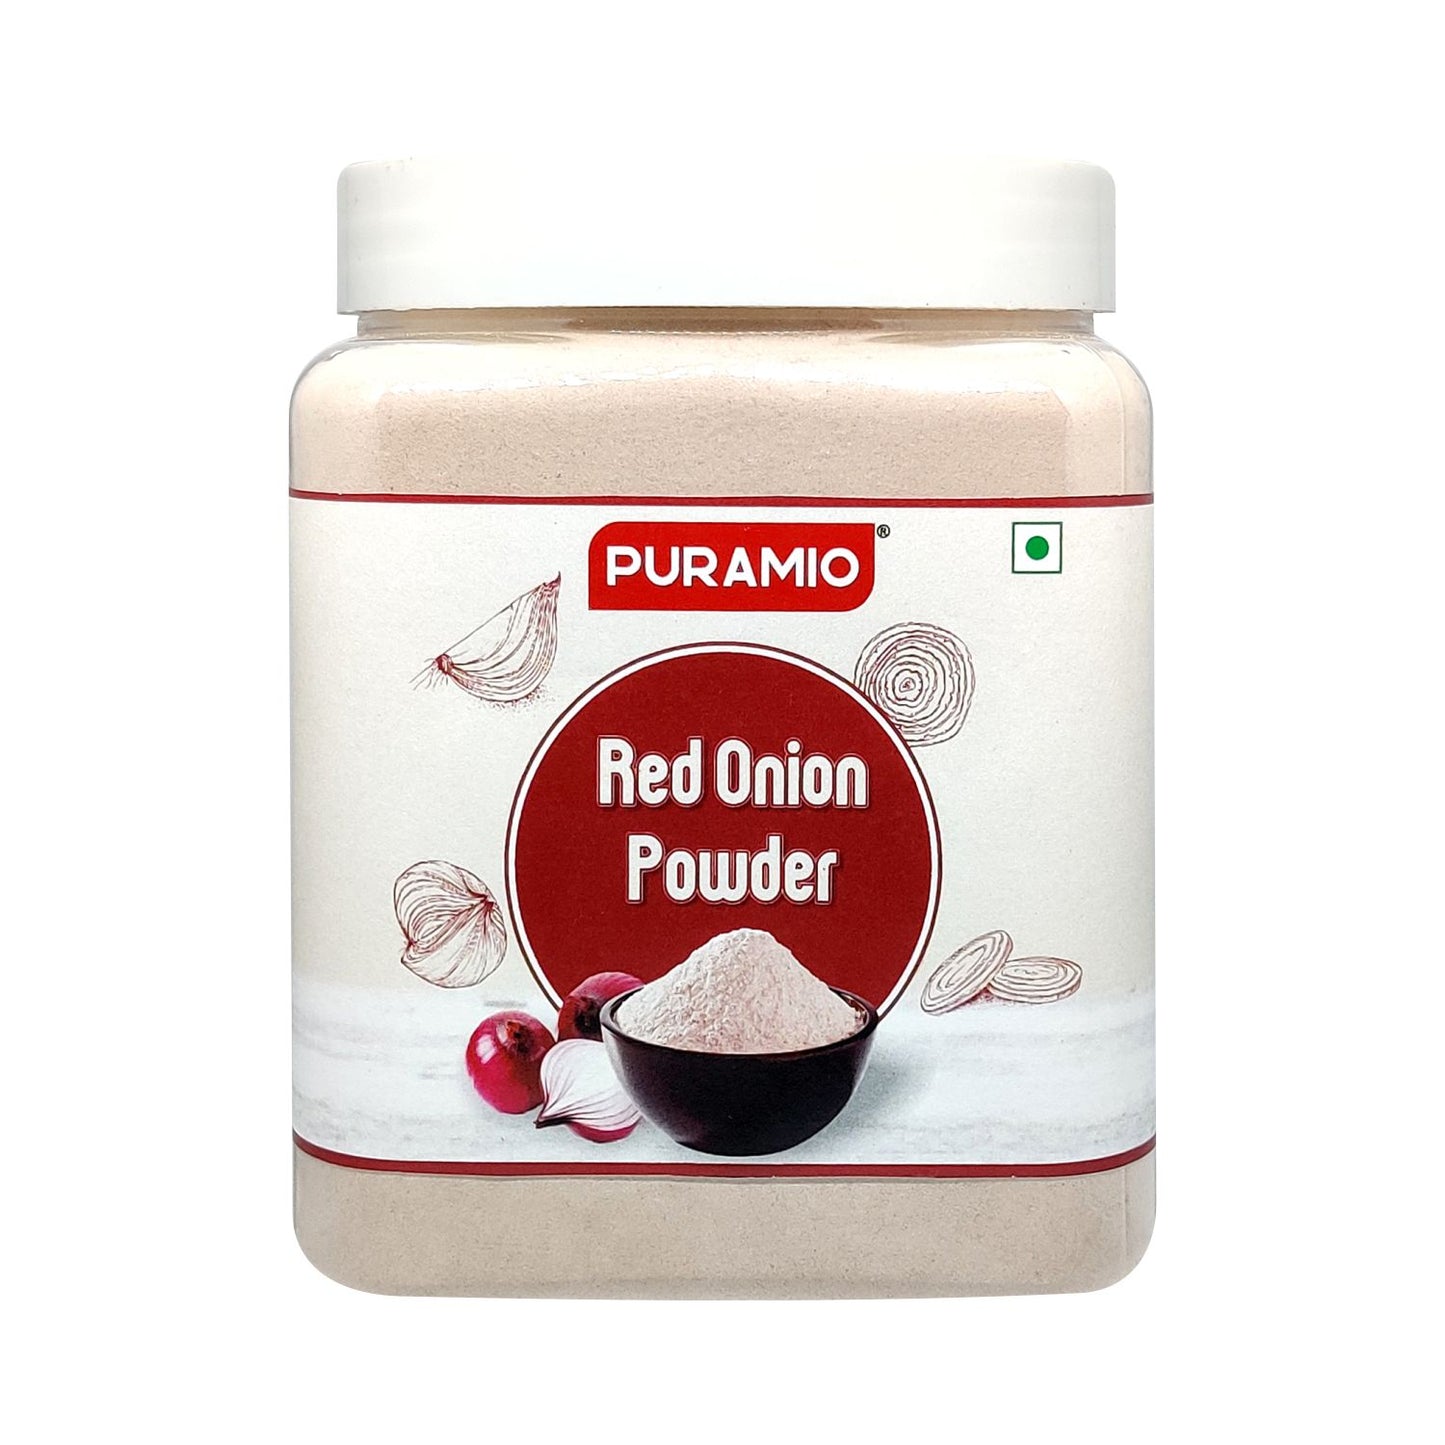 Puramio Red Onion Powder